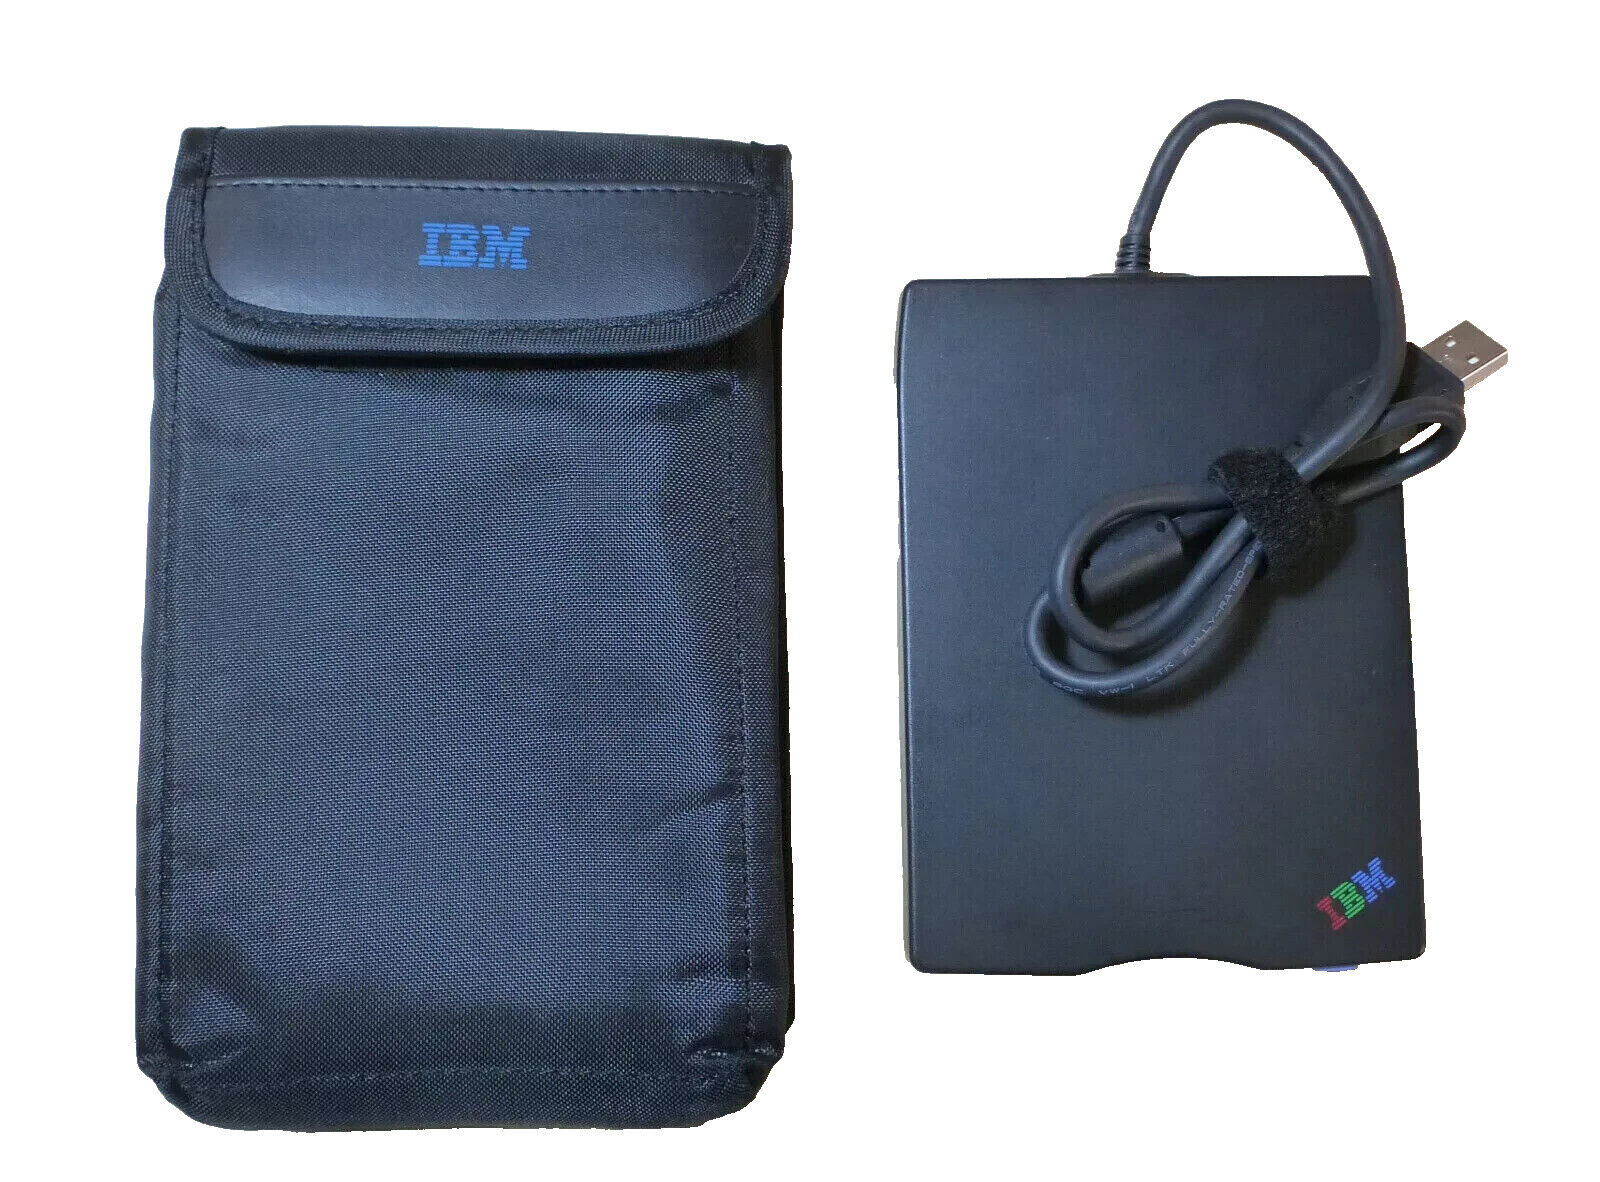 IBM 05K9283 External USB Floppy Disk Drive W/ Case Tested